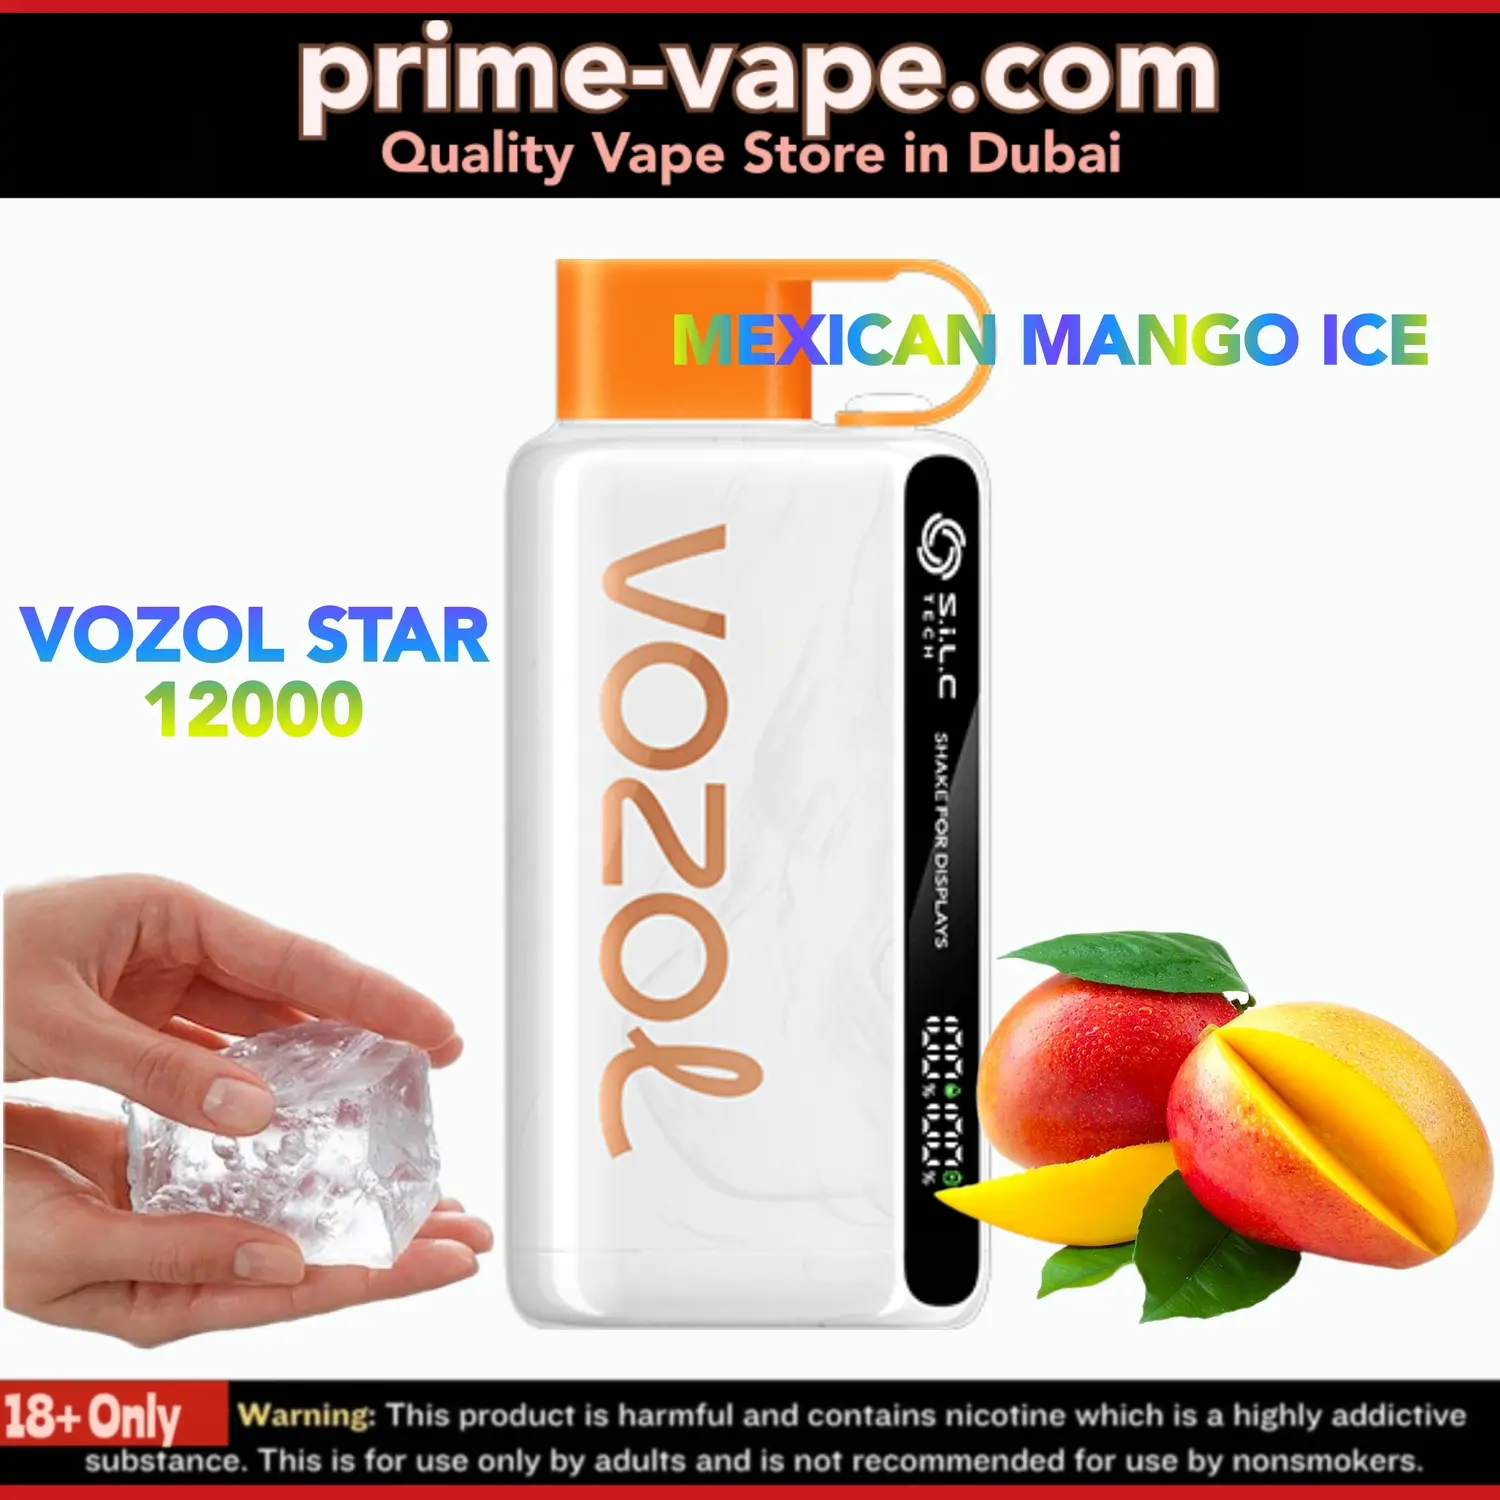 Vozol Star Mexican Mango Ice 12000 Puffs Disposable Vape- Best